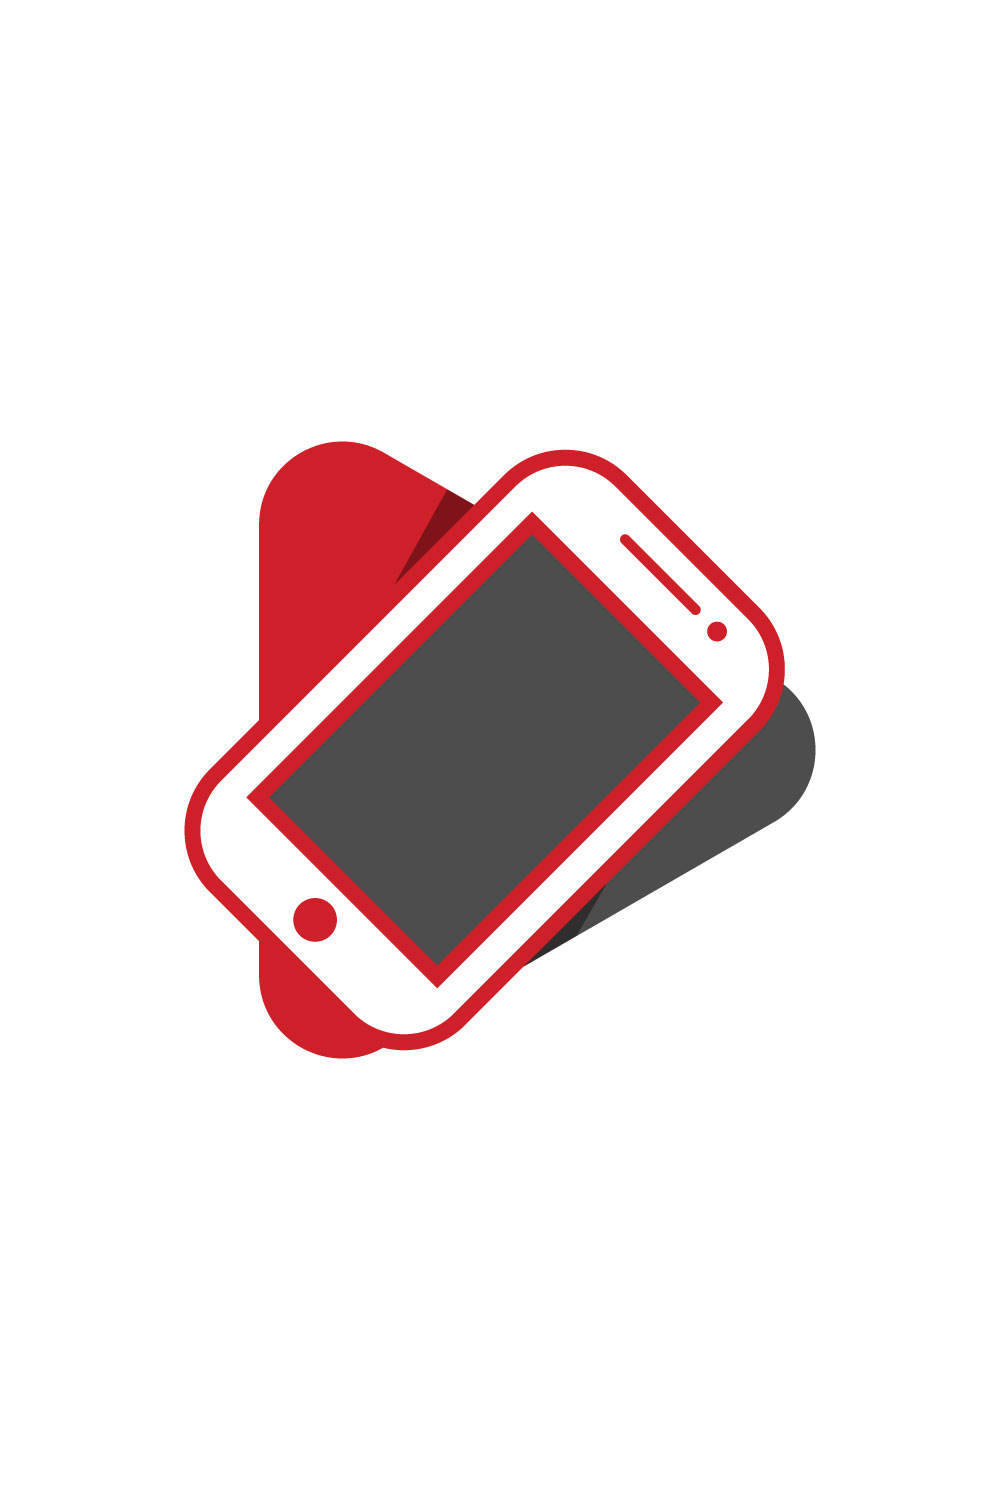 Modern Mobile Phone logo design, Vector design template pinterest preview image.